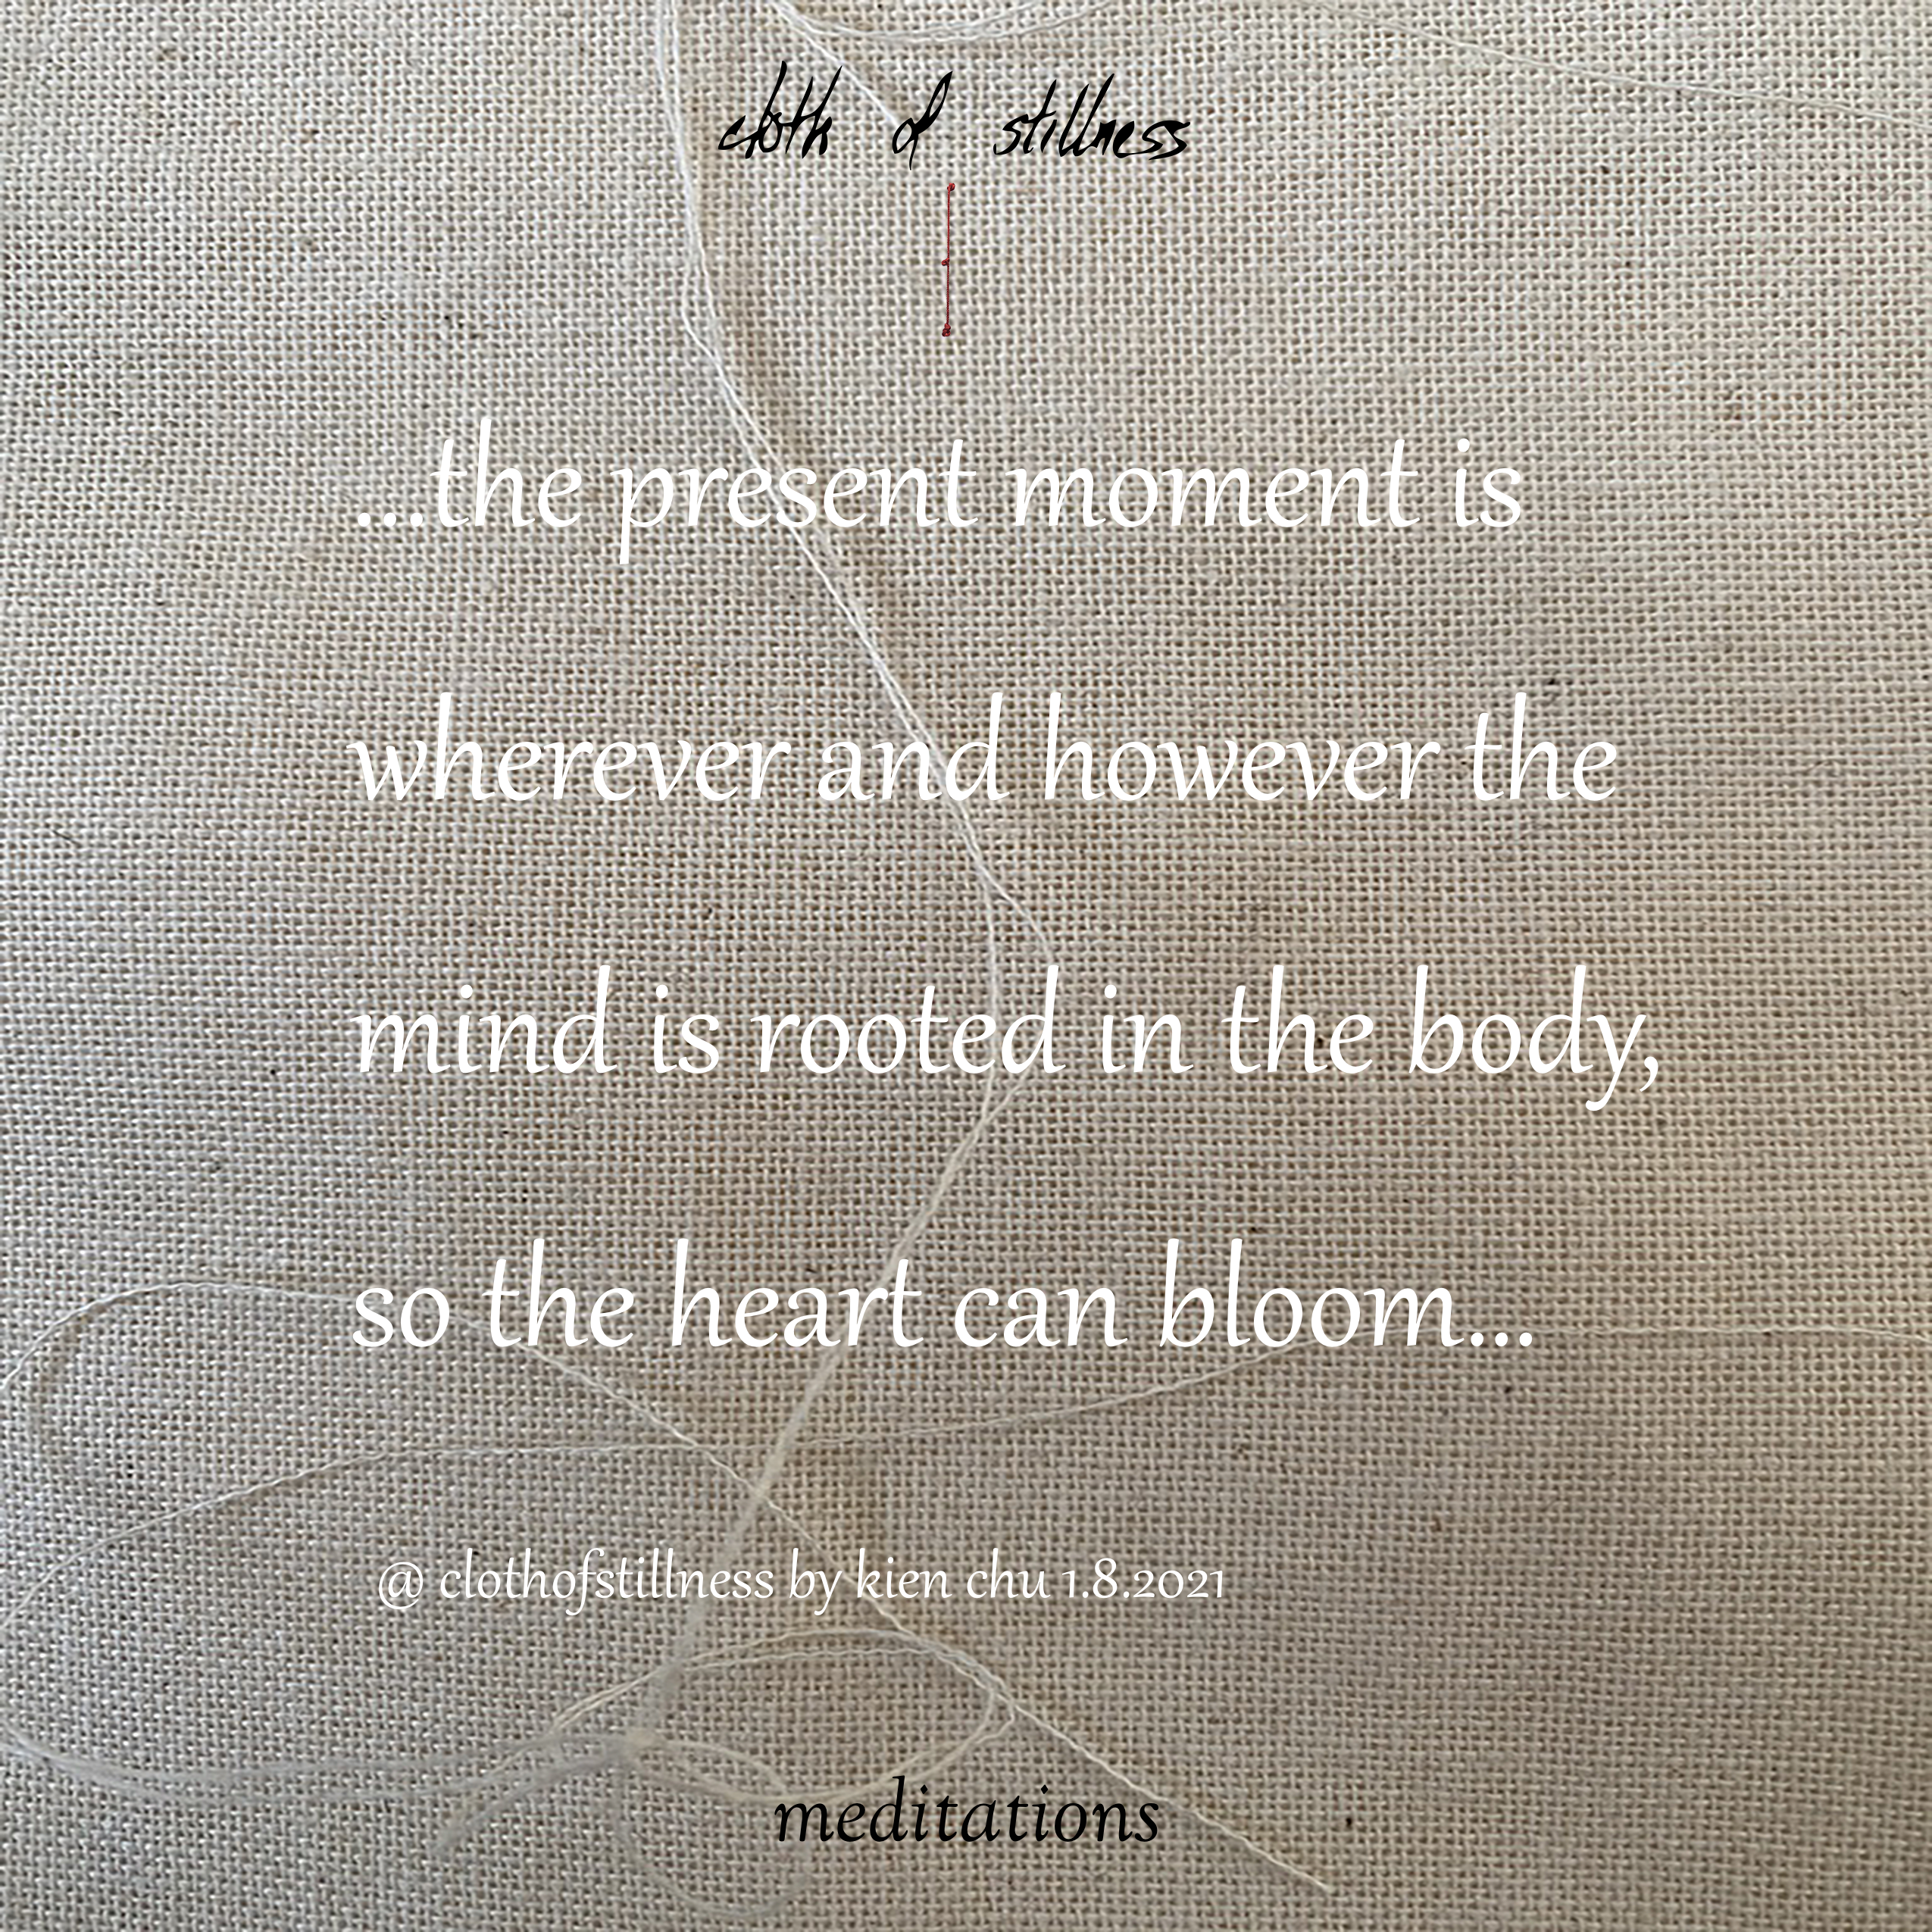 cloth of stillness meditations by kien chu...heart...5 minutes...1.8.2021...ready to buy